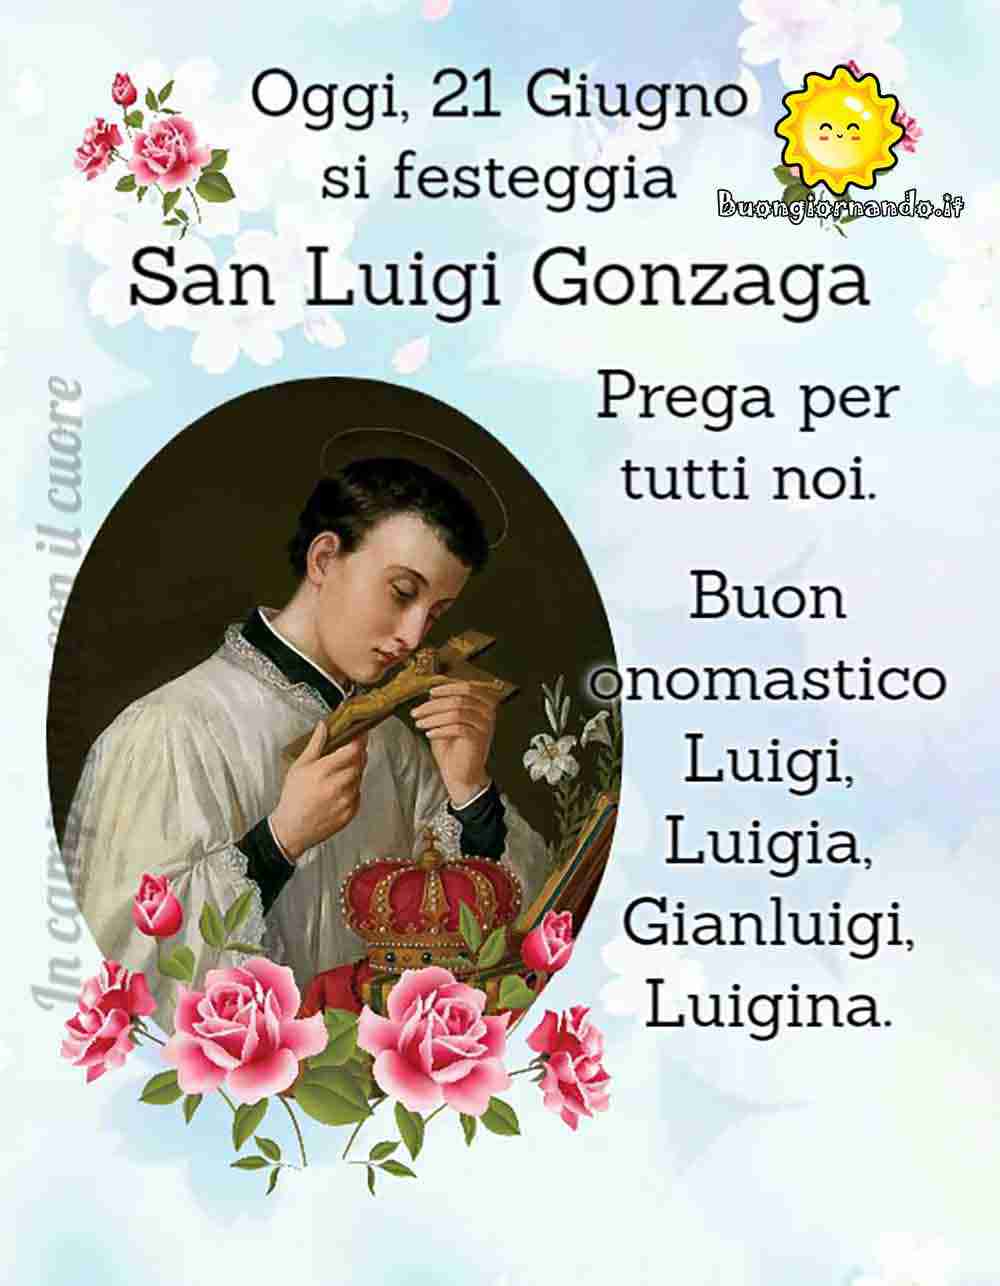 San Luigi Gonzaga immagini nuove